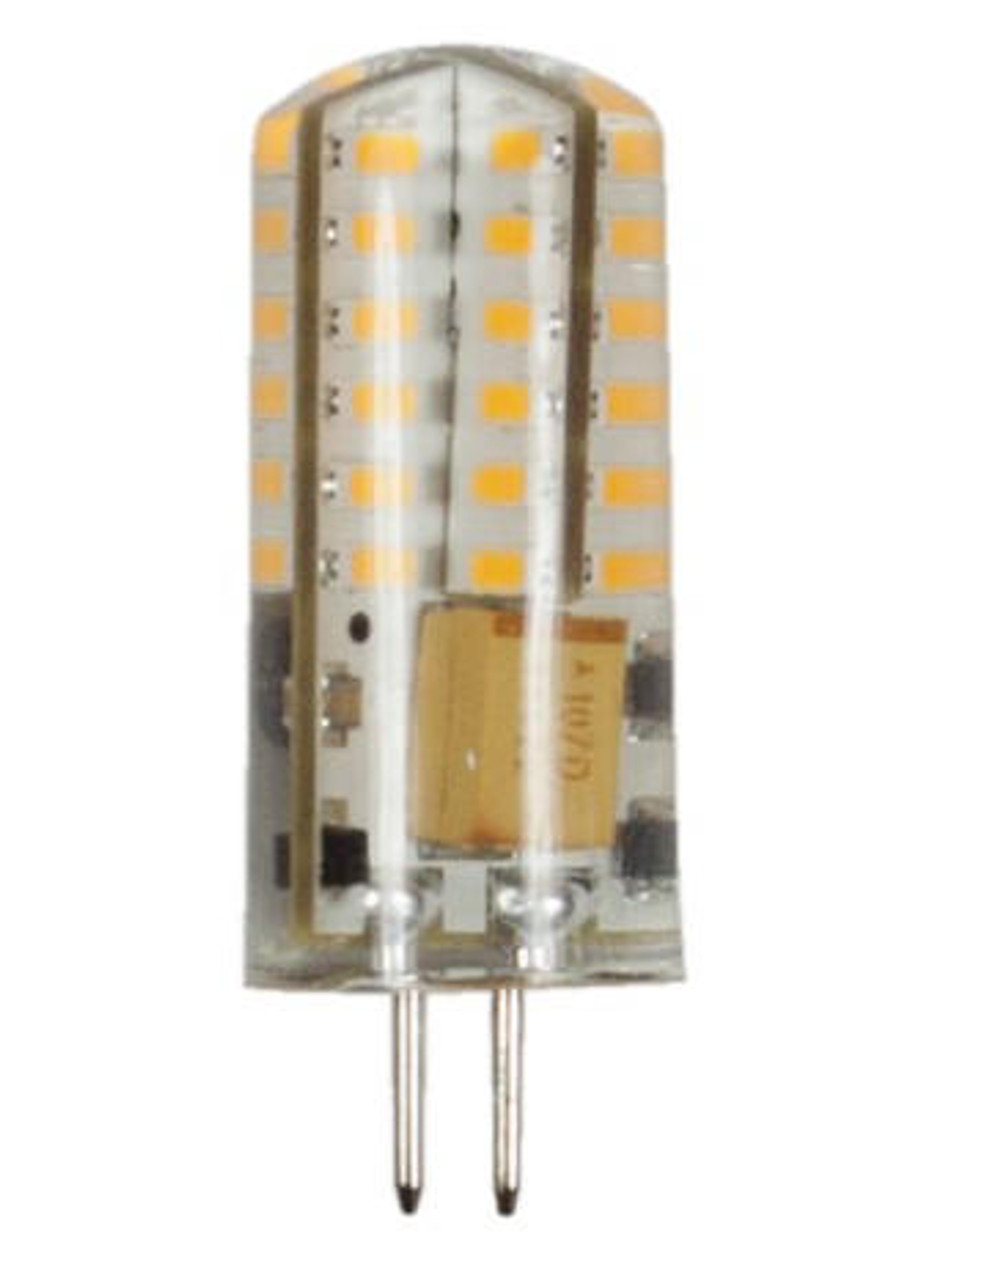 Brillance LED Brillance G4 ECOSTAR Bi-Pin 2 Watt & 3 Watt, 2700K or 3000k Lumens of 150 thru 245 